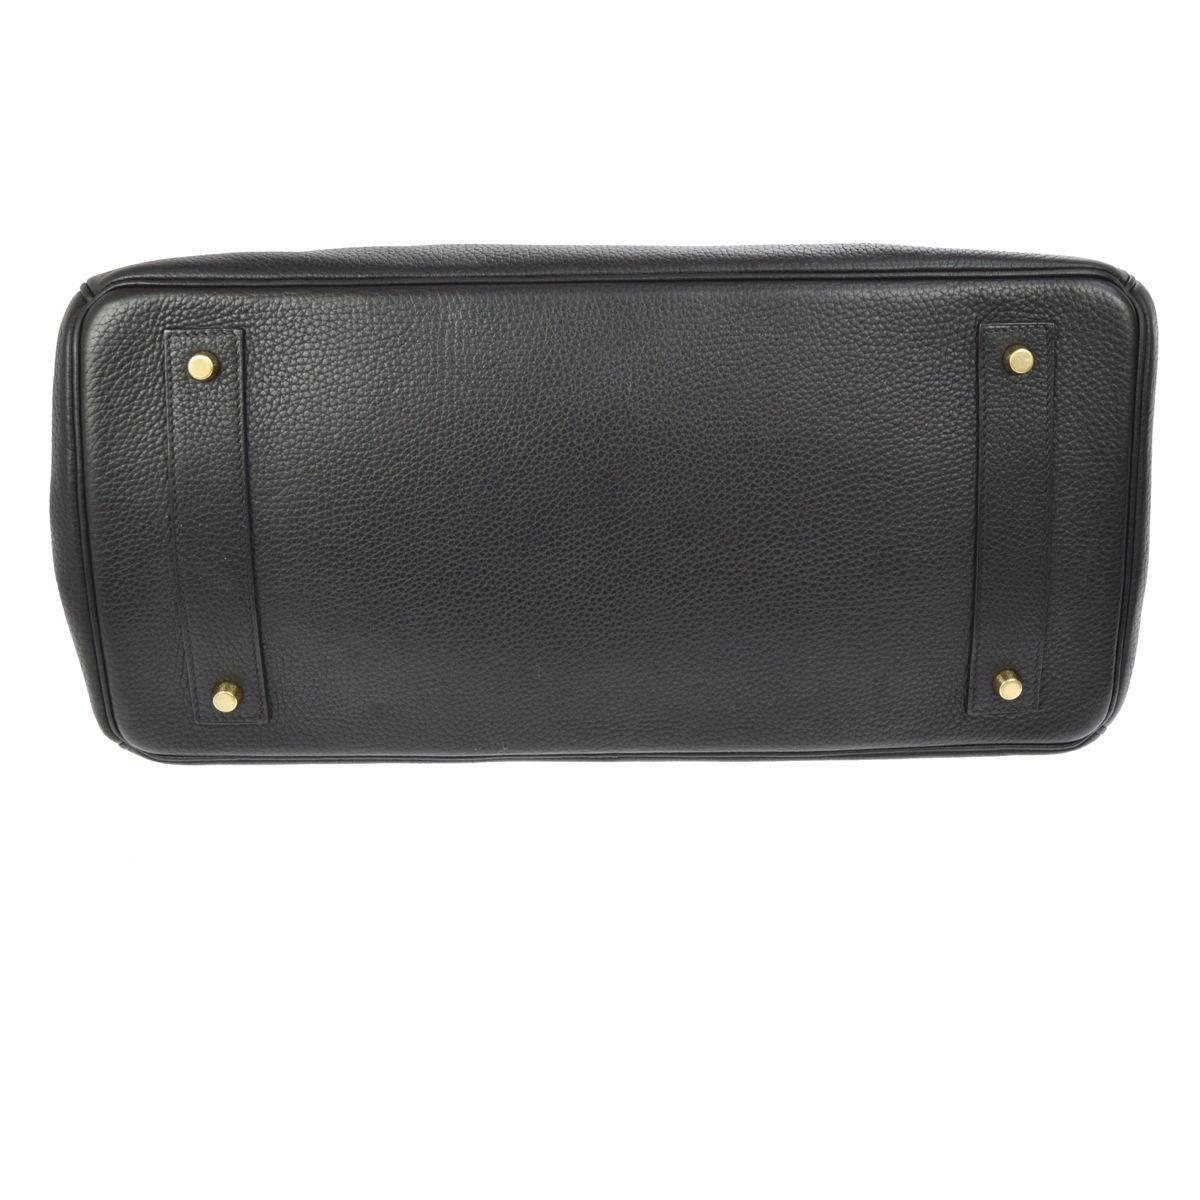 Hermes Birkin Black Leather Gold Hardware Top Handle Satchel Bag and Accessories 2